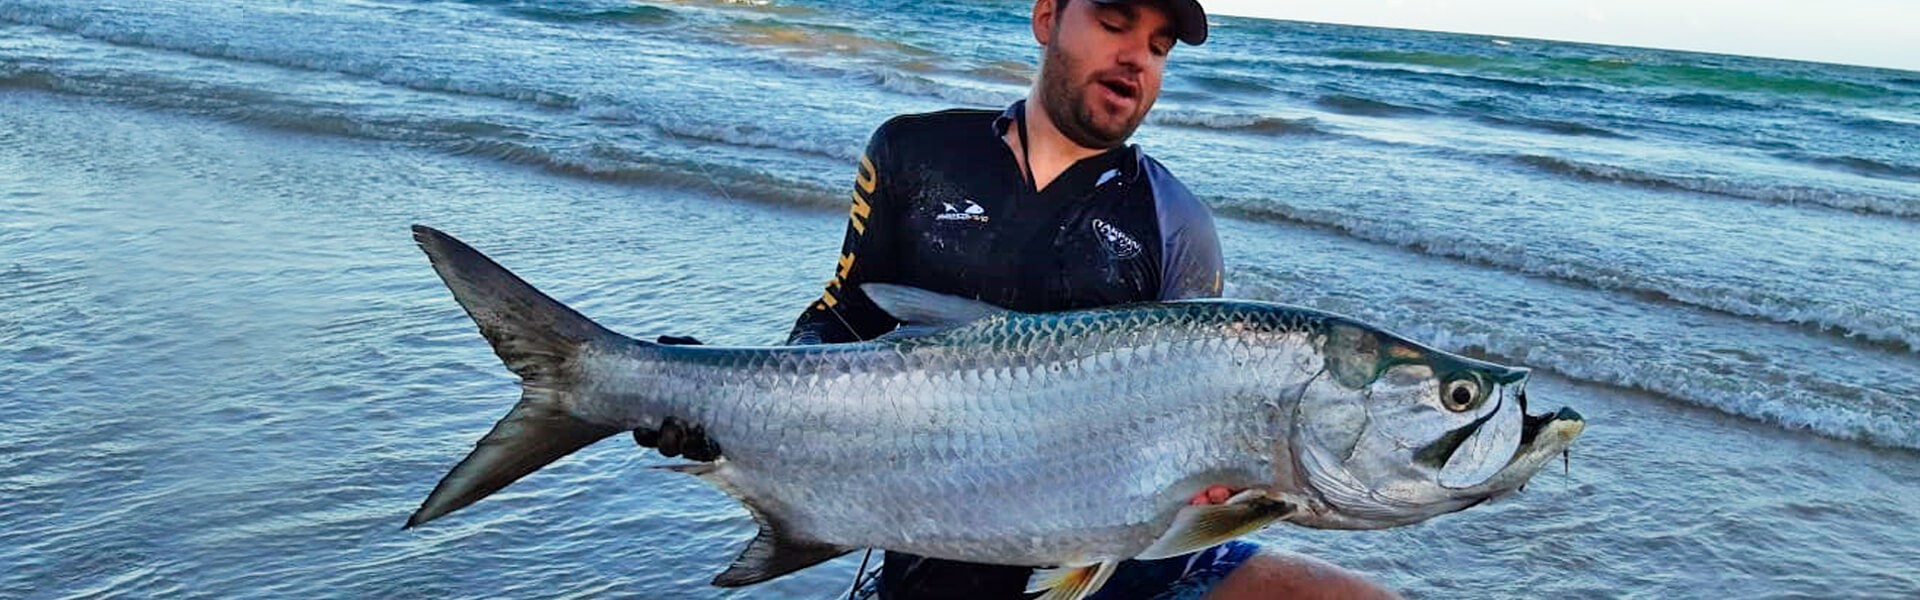 Pescador de Recife é aplaudido ao soltar Tarpon gigante